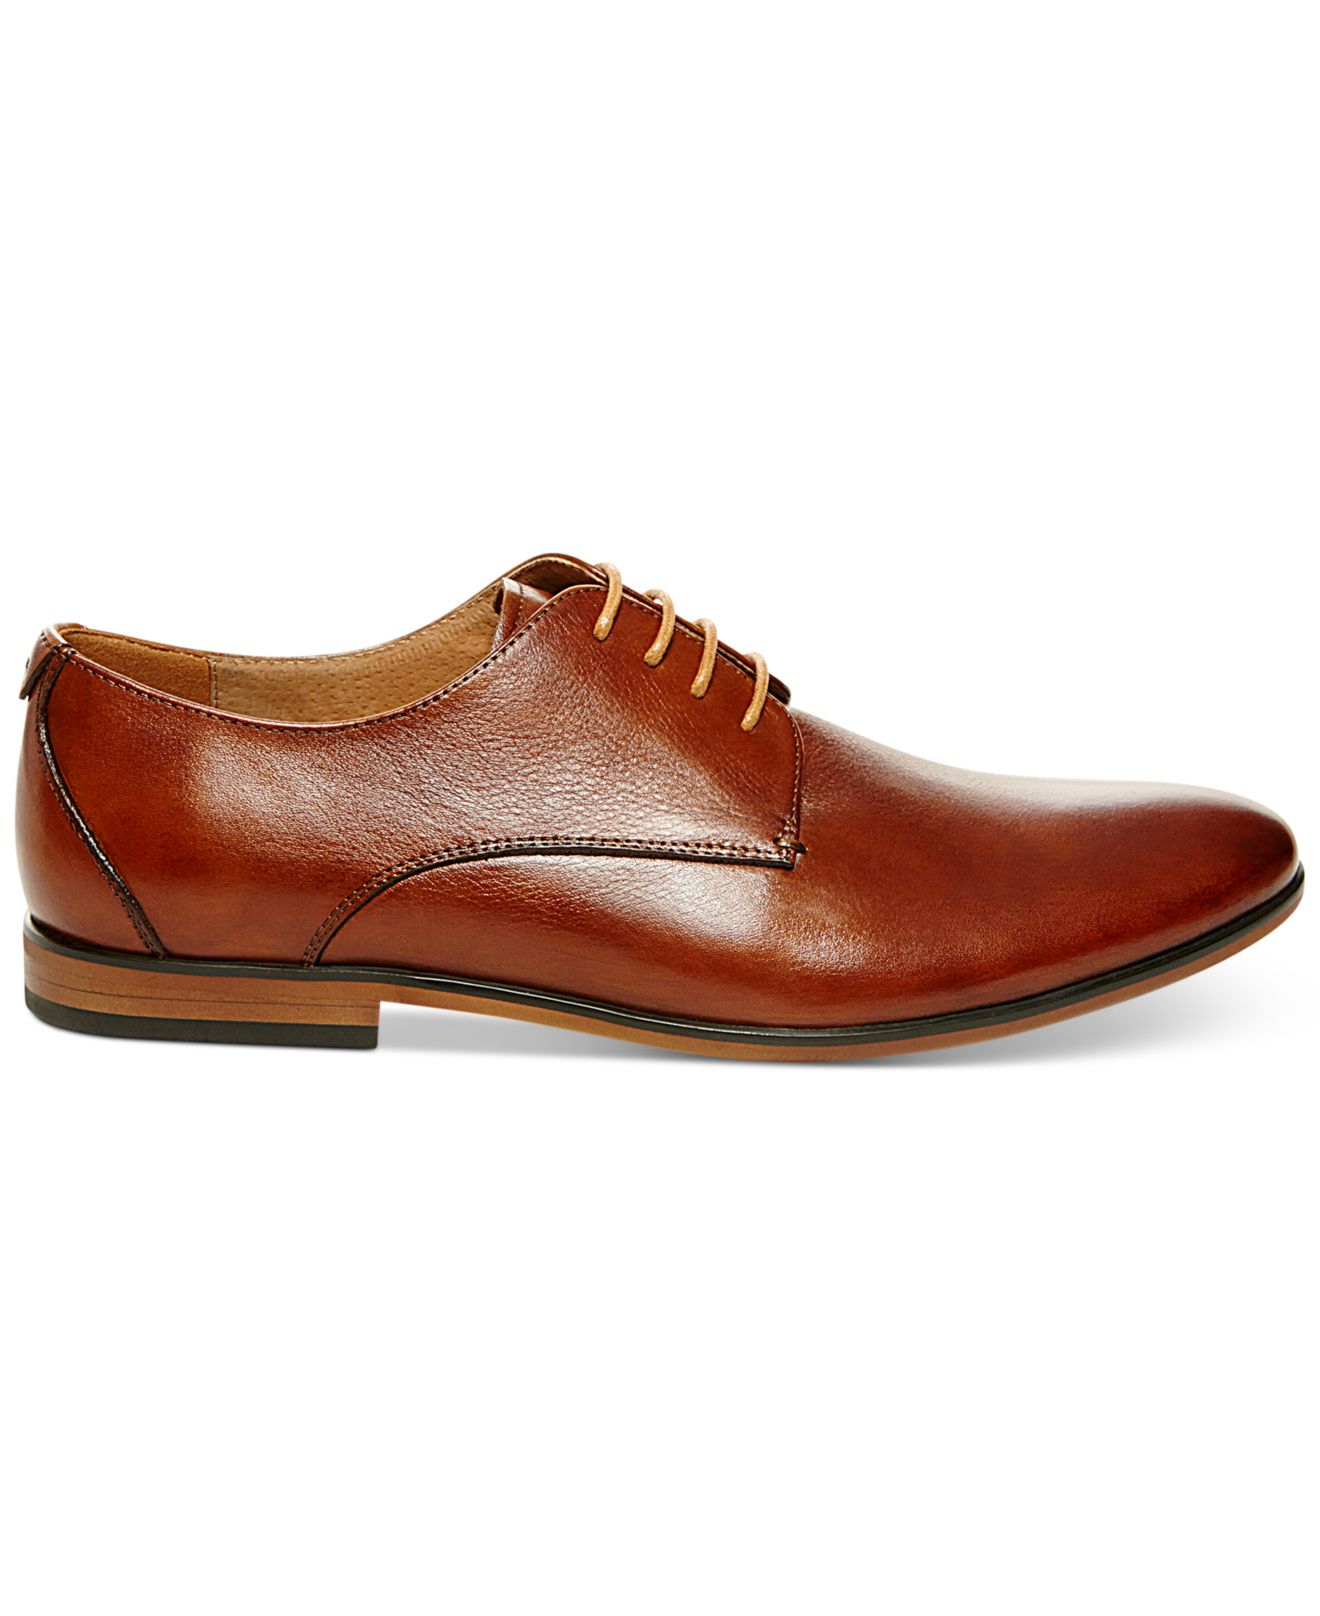 Lyst - Steve Madden Trotter Dress Shoes in Brown for Men